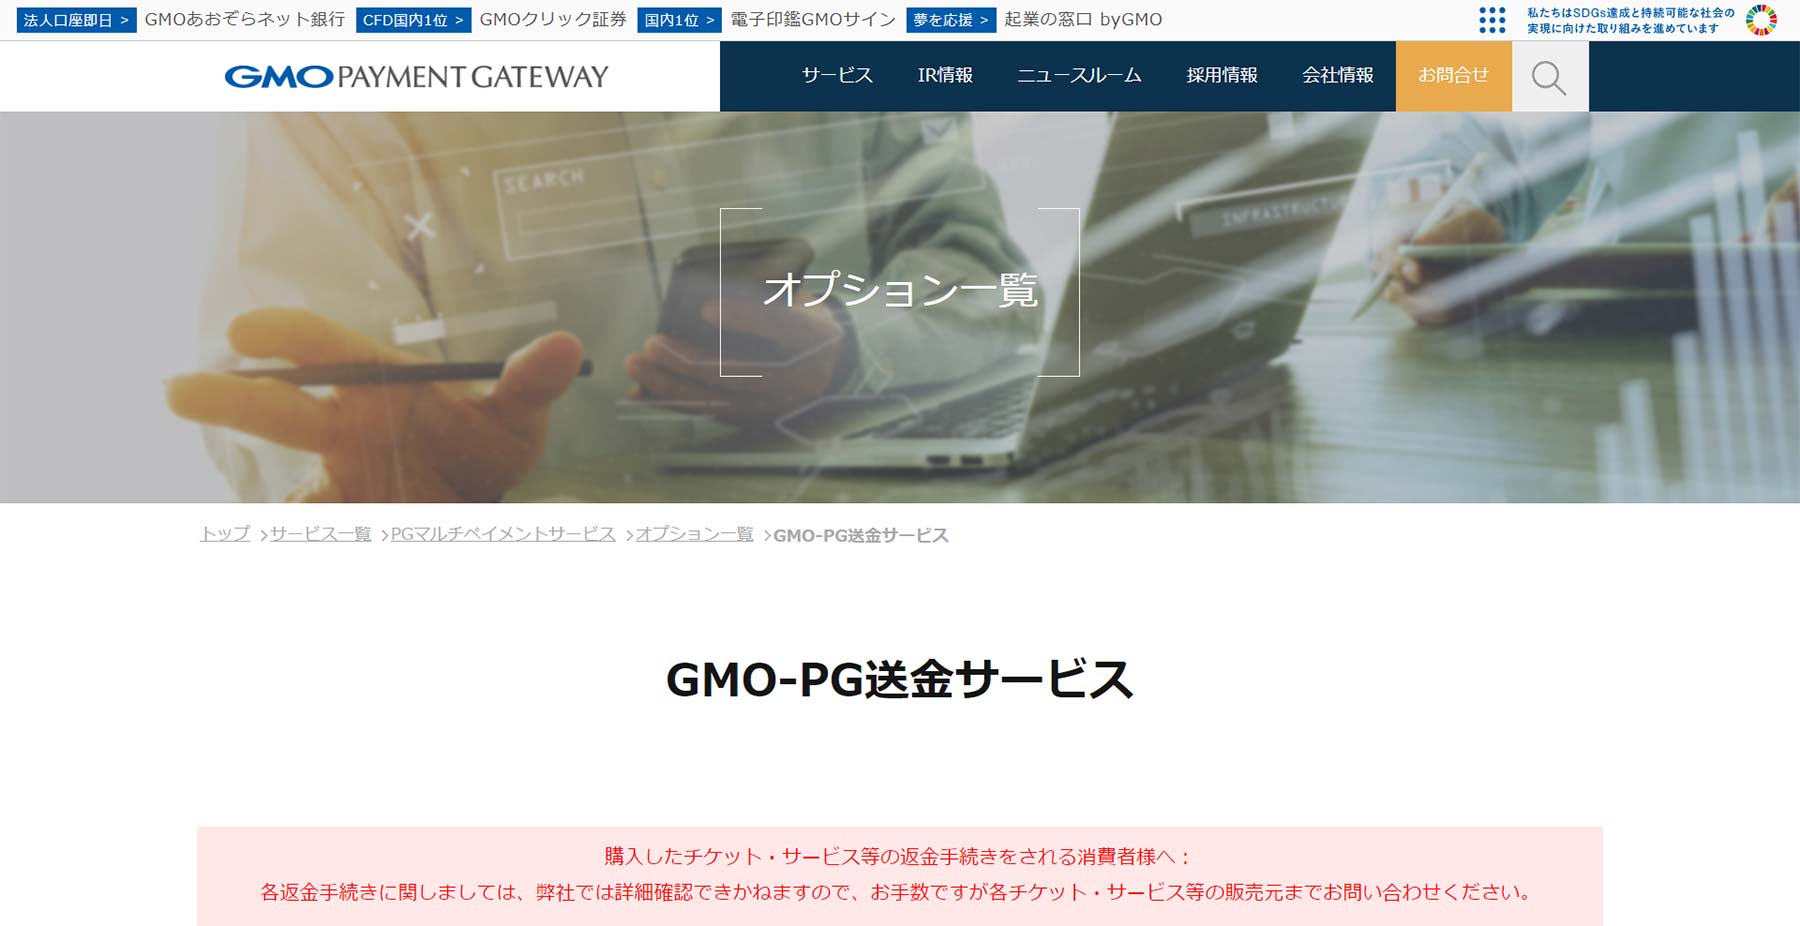 GMO-PG送金サービス公式Webサイト